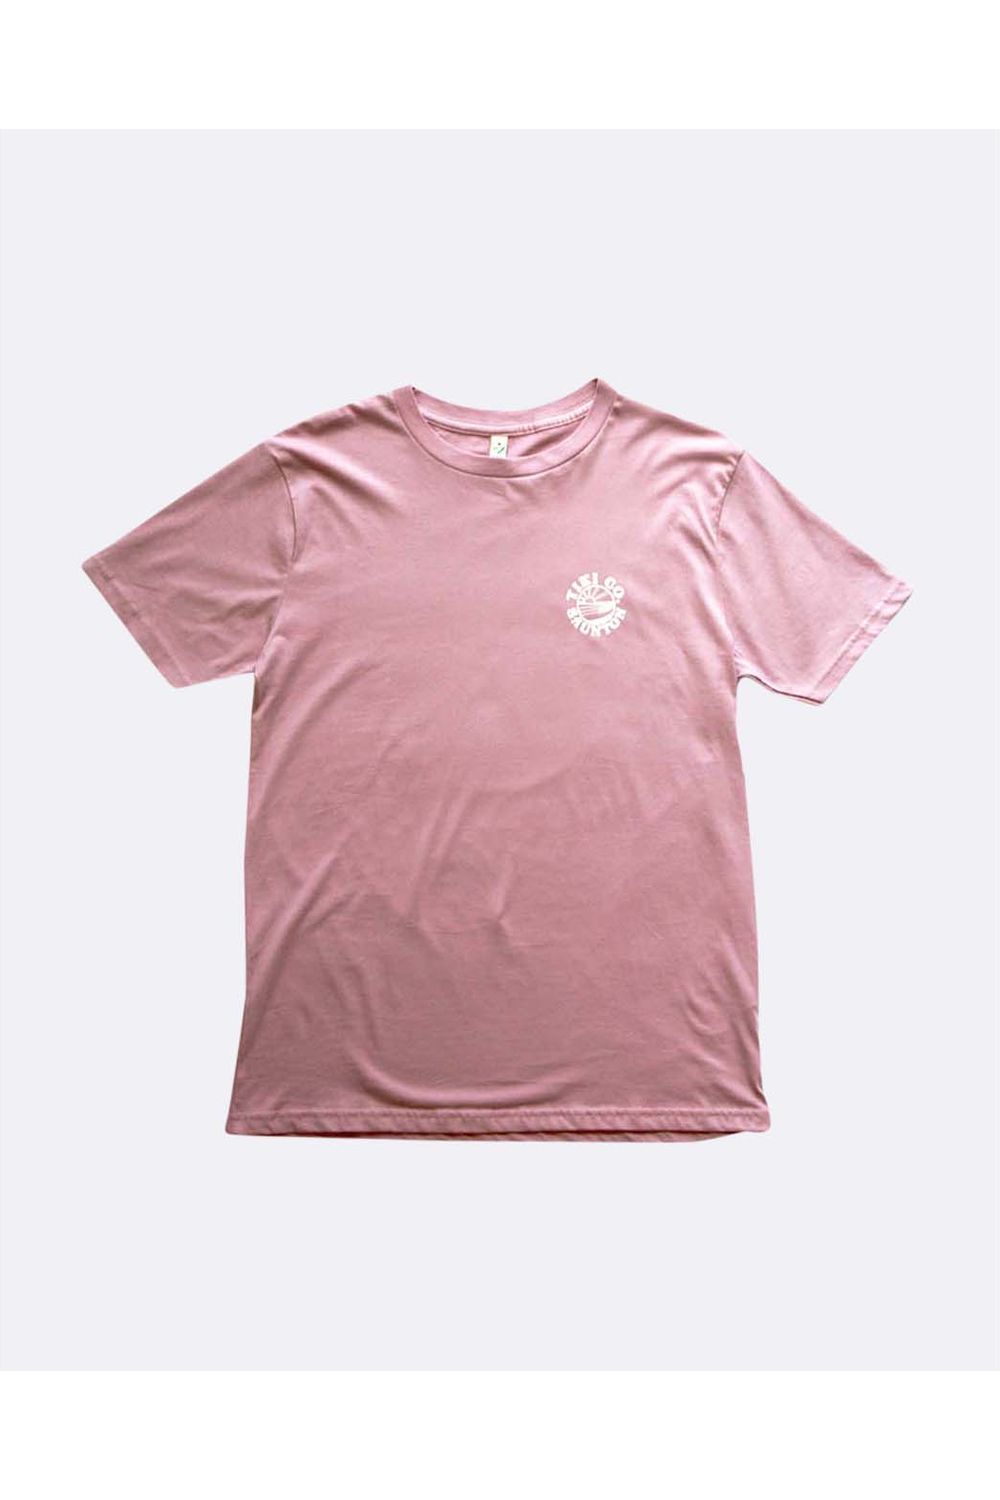 Tiki Saunton T-Shirt